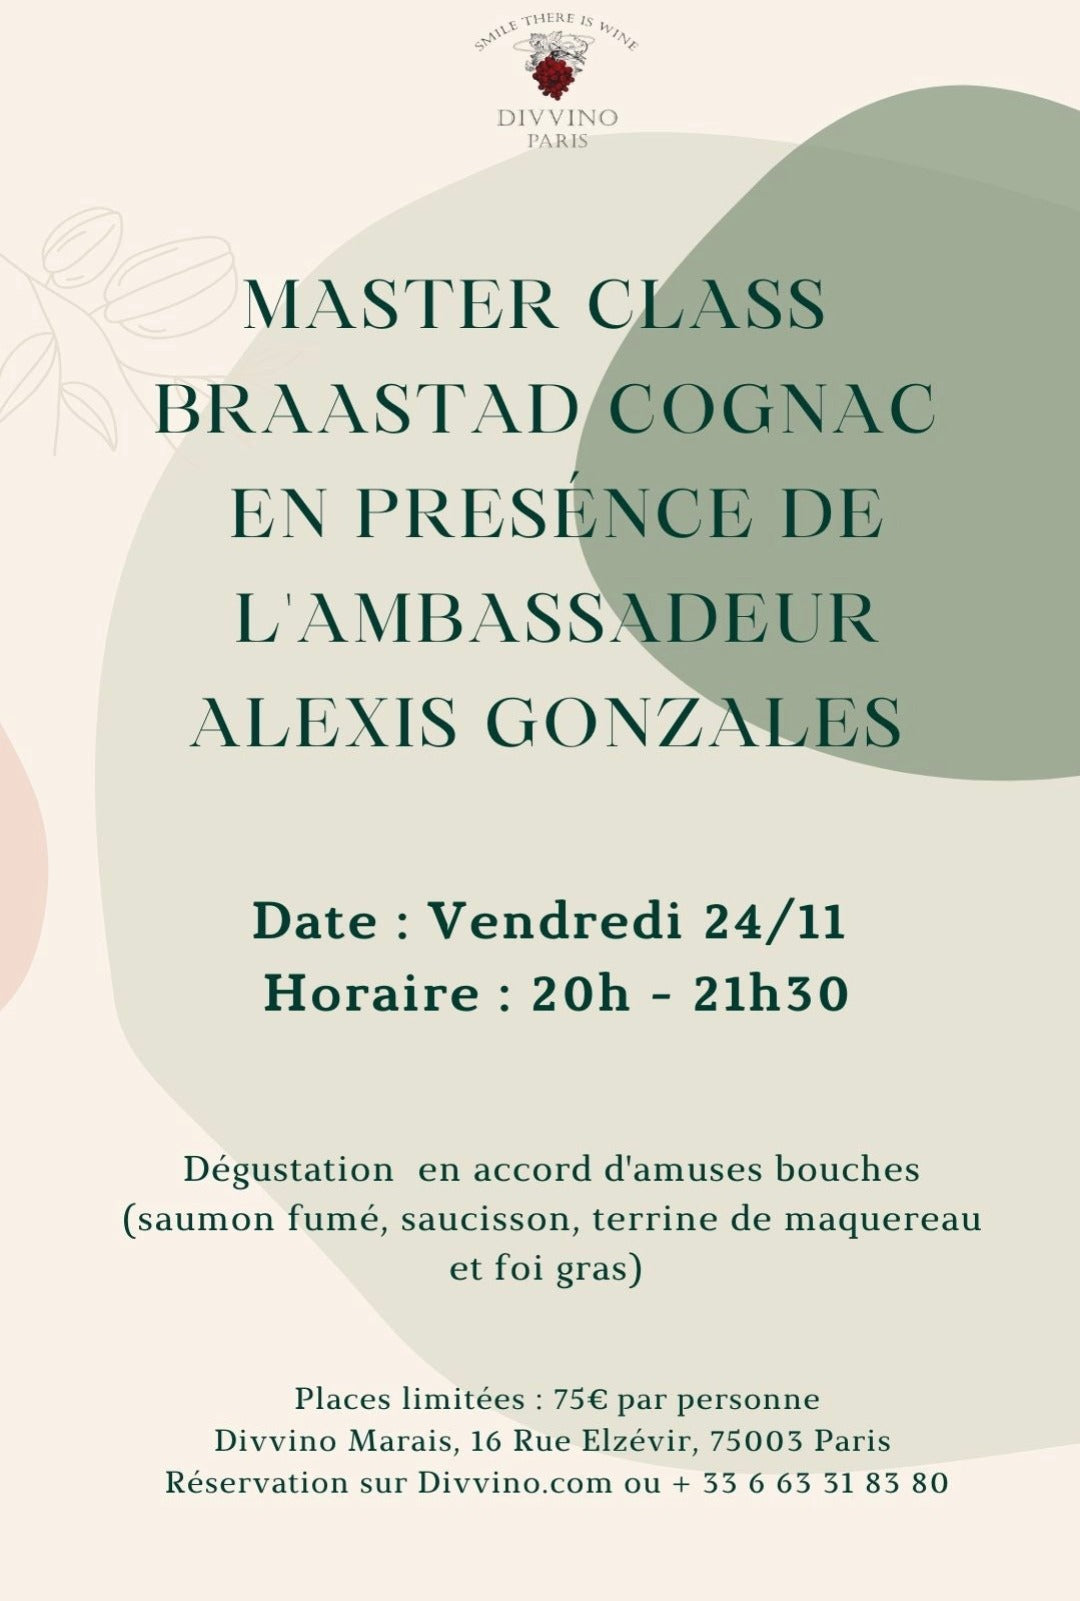 Master Class Braastad Cognac - 24/11